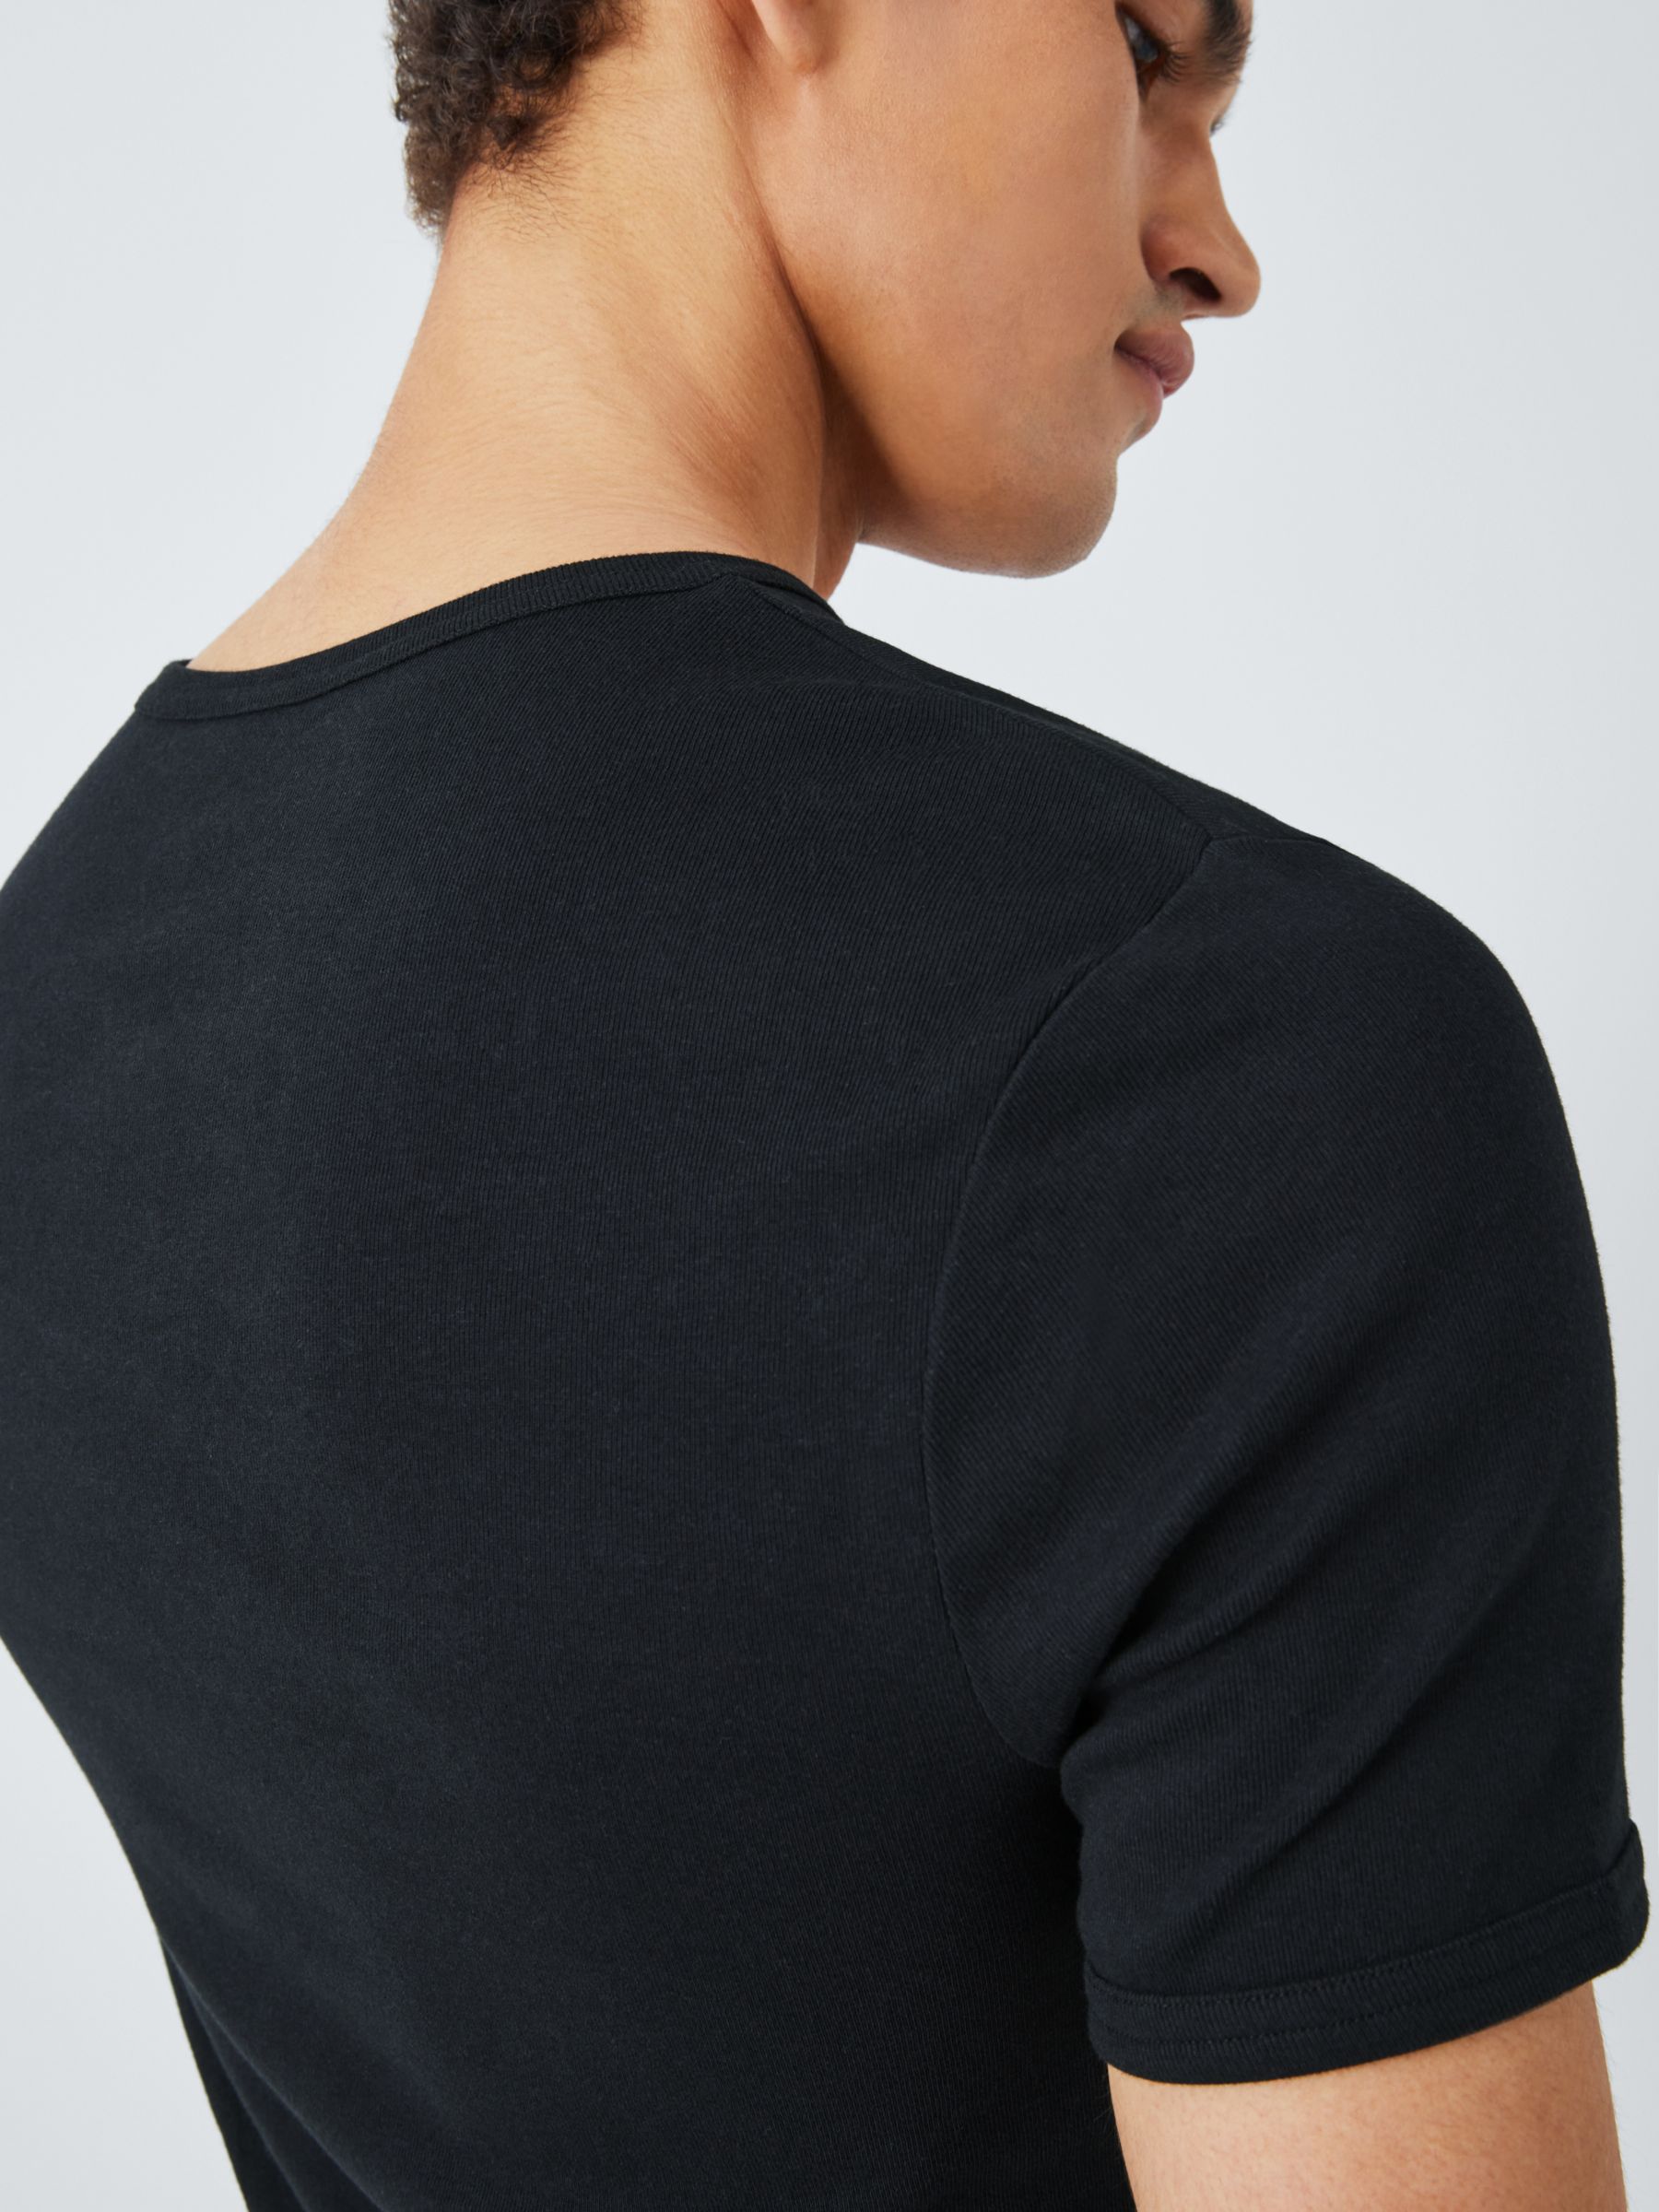 John Lewis Organic Cotton Vest T-Shirt, Black, XL